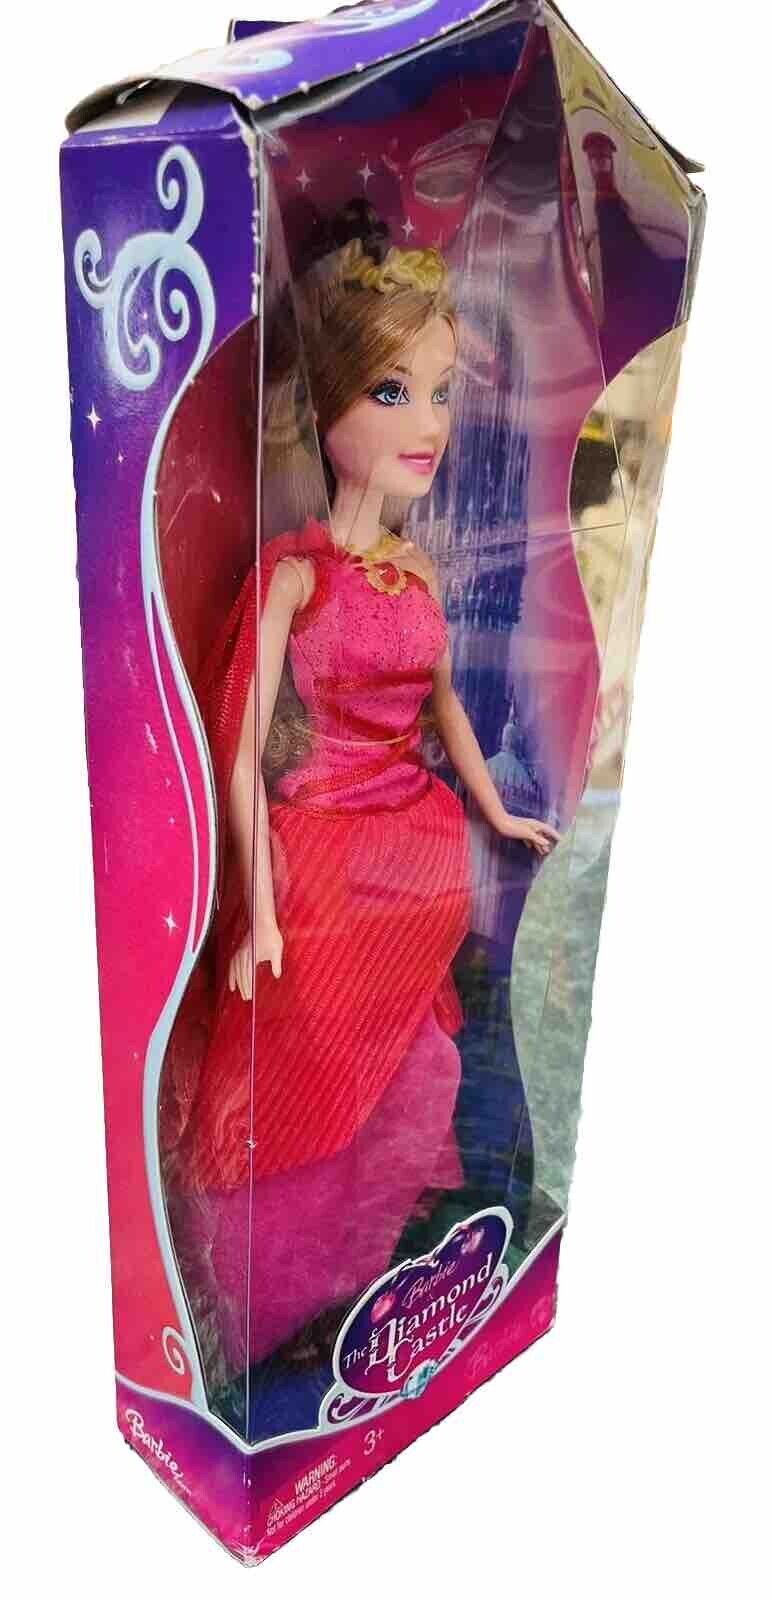 N3934 Mattel Barbie “The Diamond Castle Muse Doll” New In Box!